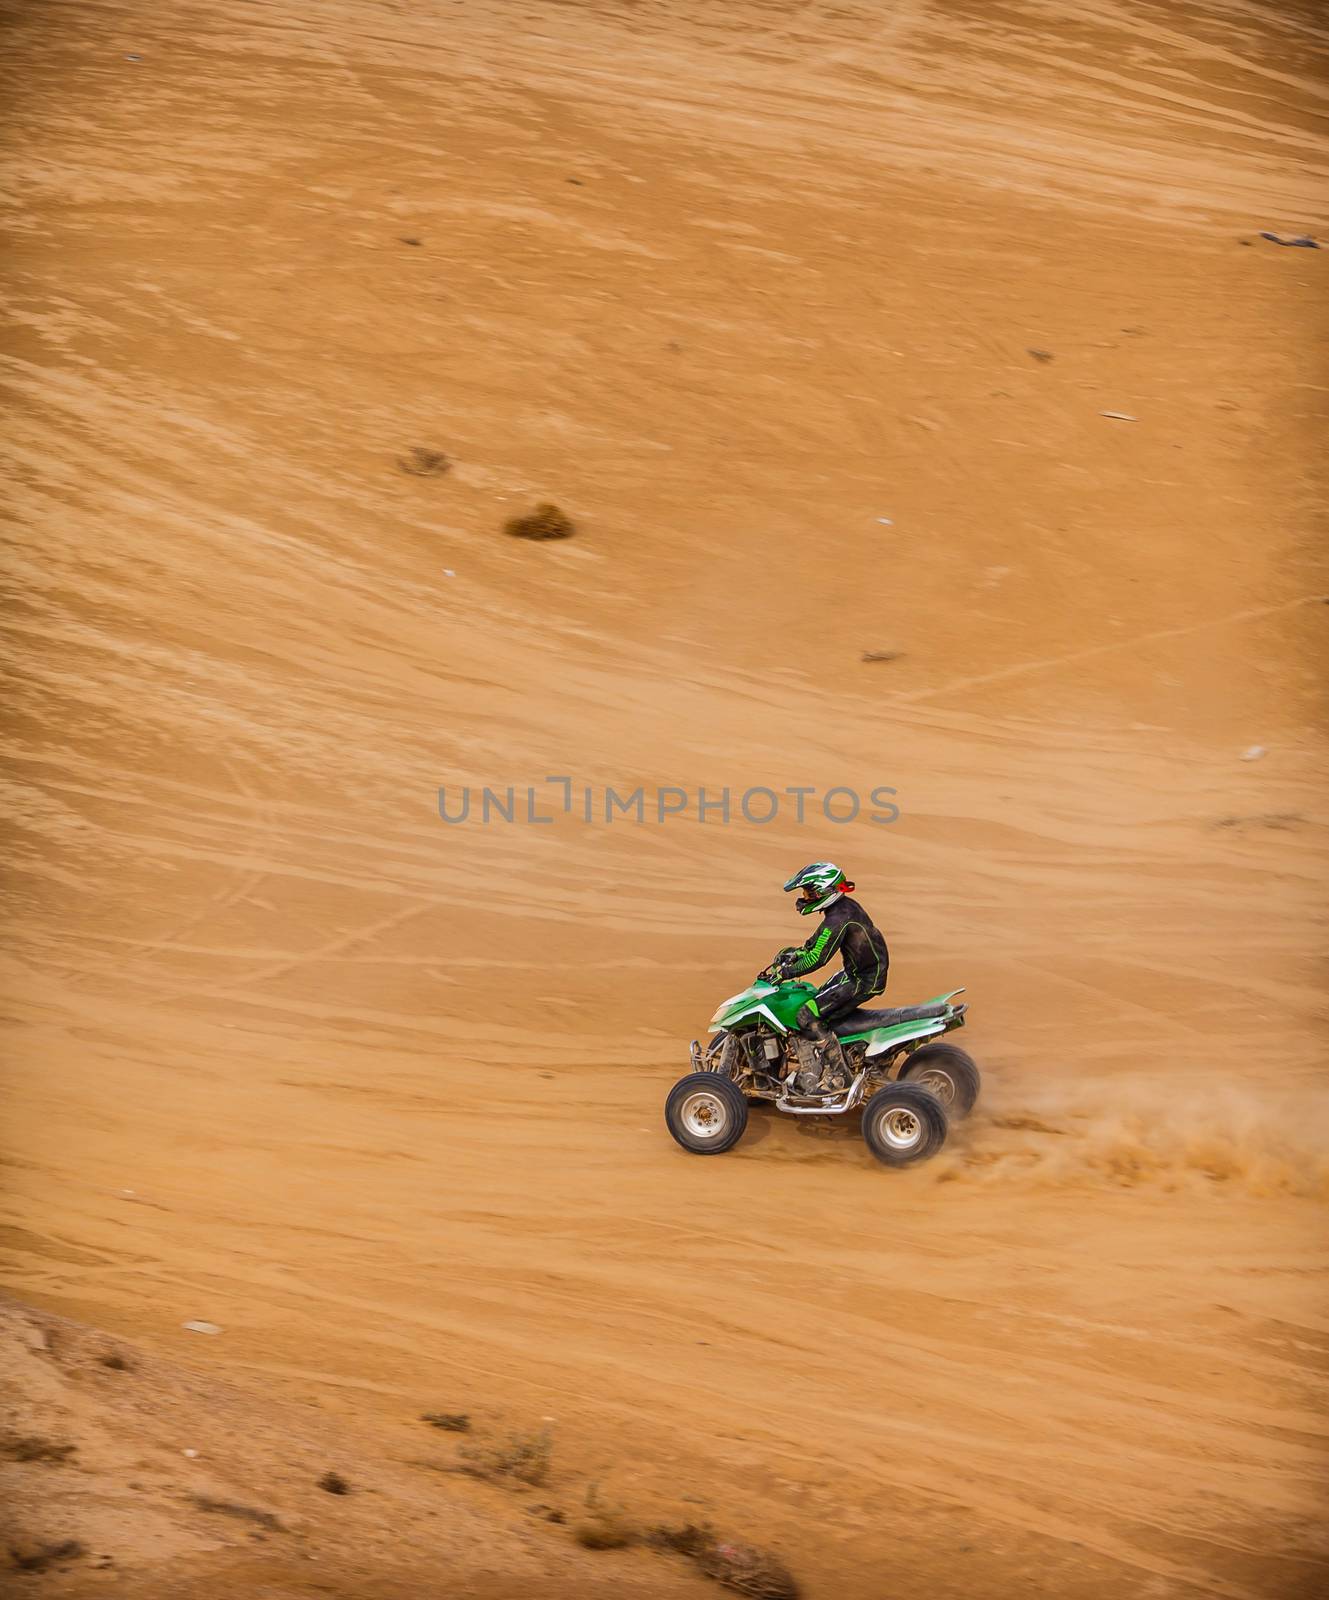 one rider through the desert by MegaArt